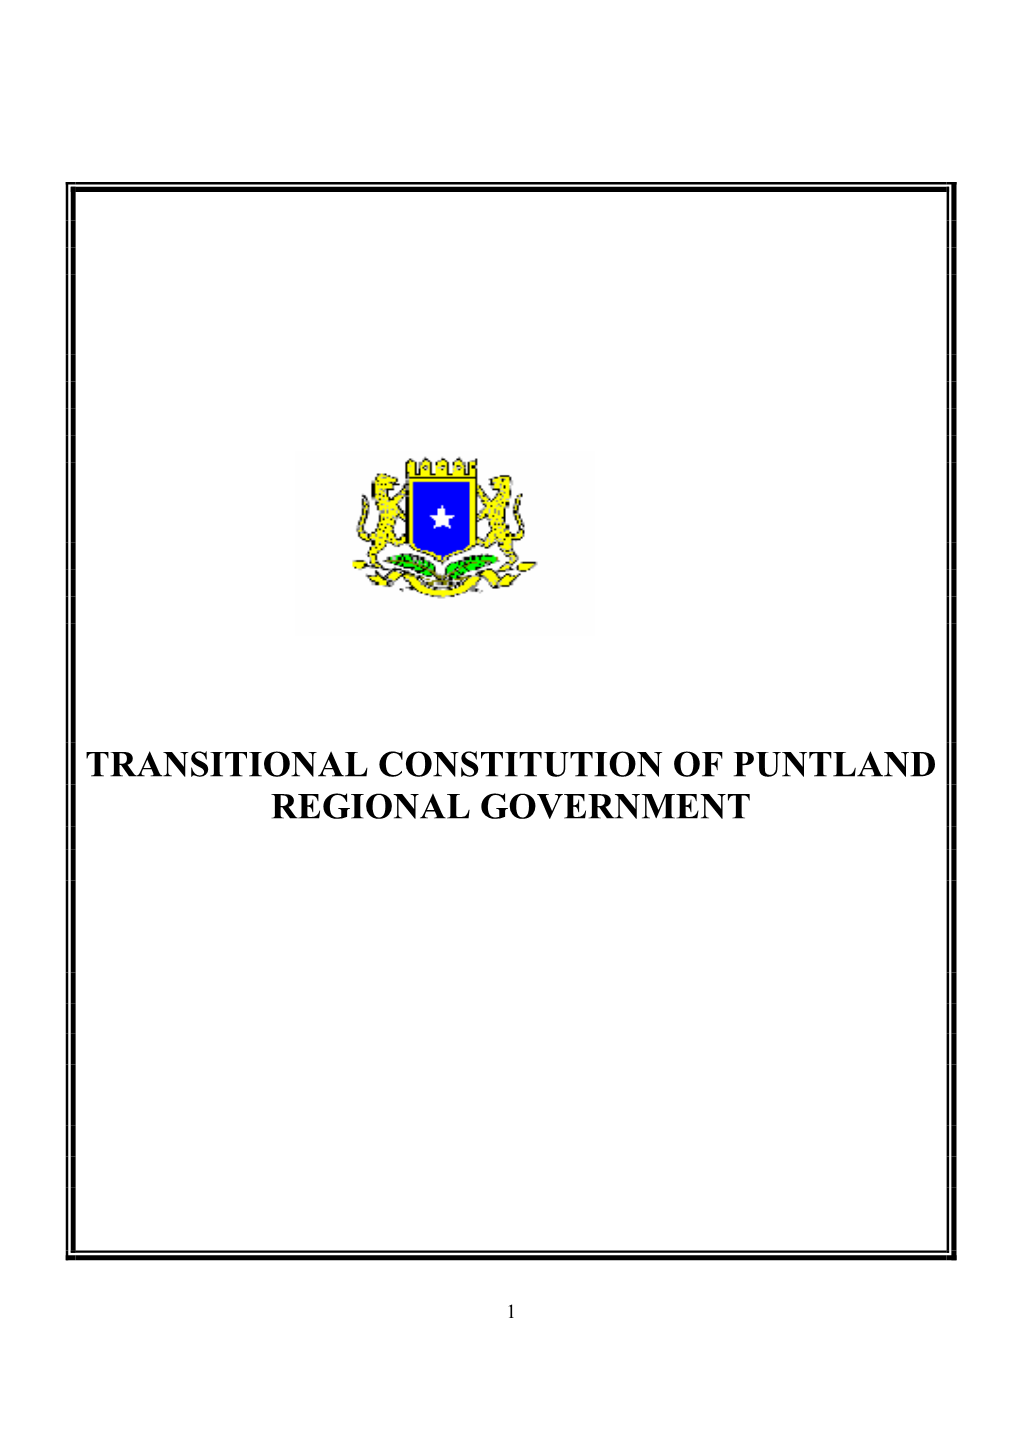 Puntland Constitution Introduction